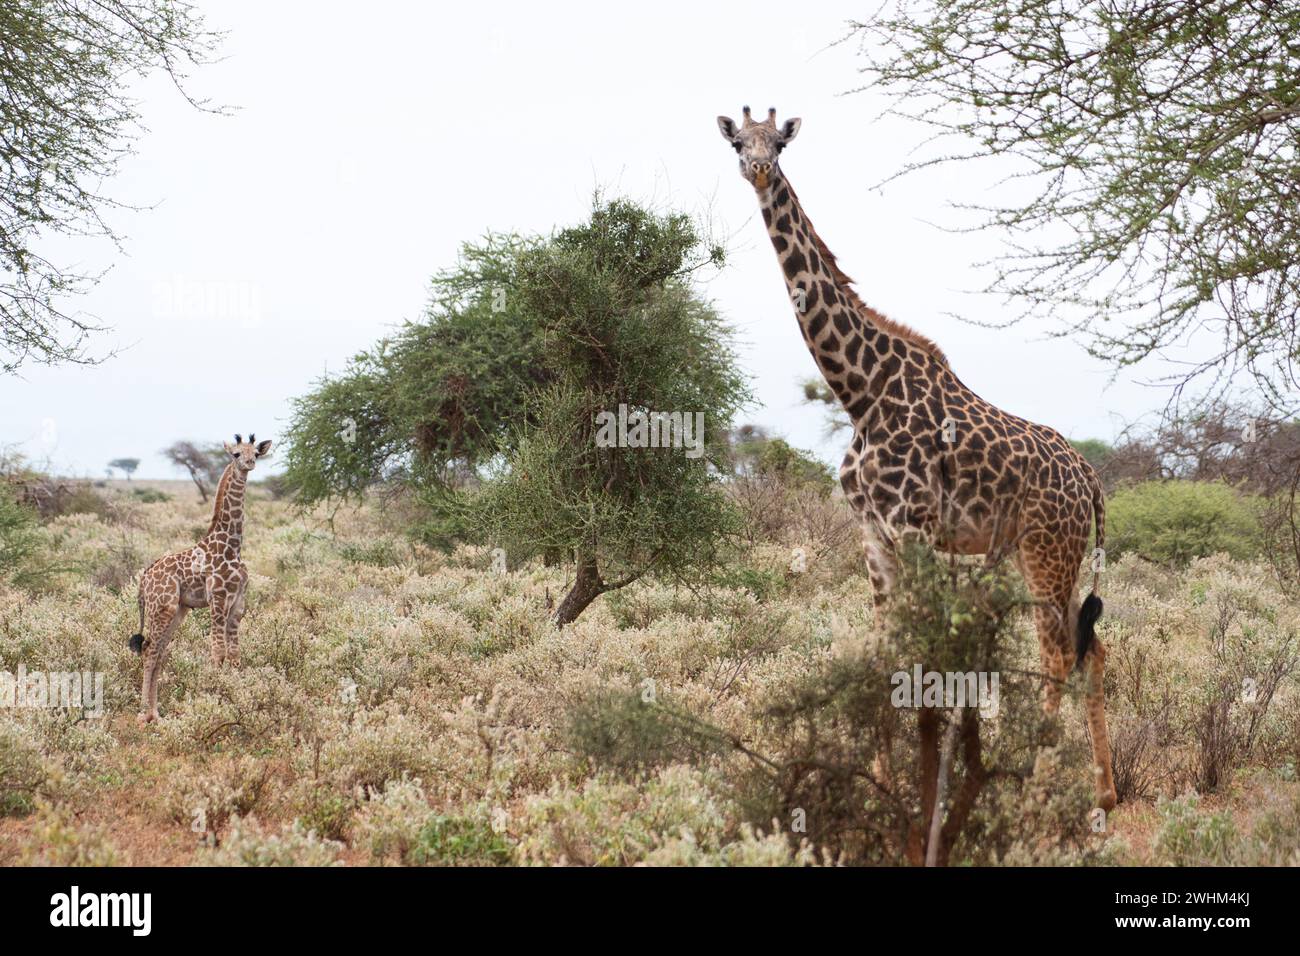 Girafe Masai (Giraffa camelopardalis) mère et jeune veau Banque D'Images